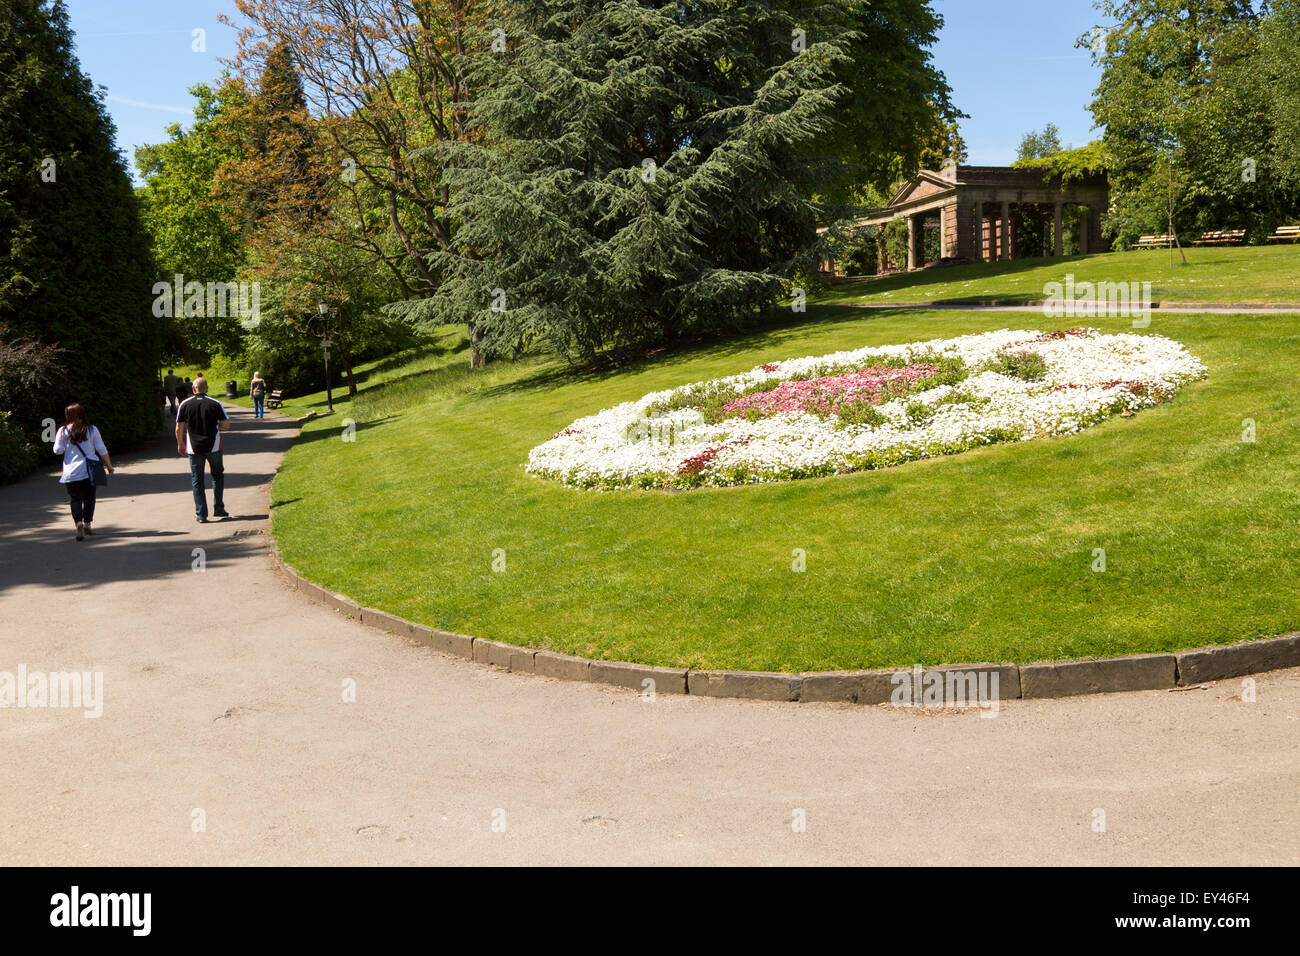 Valley Gardens Park et jardin, Harrogate, Yorkshire, Angleterre, Royaume-Uni Banque D'Images